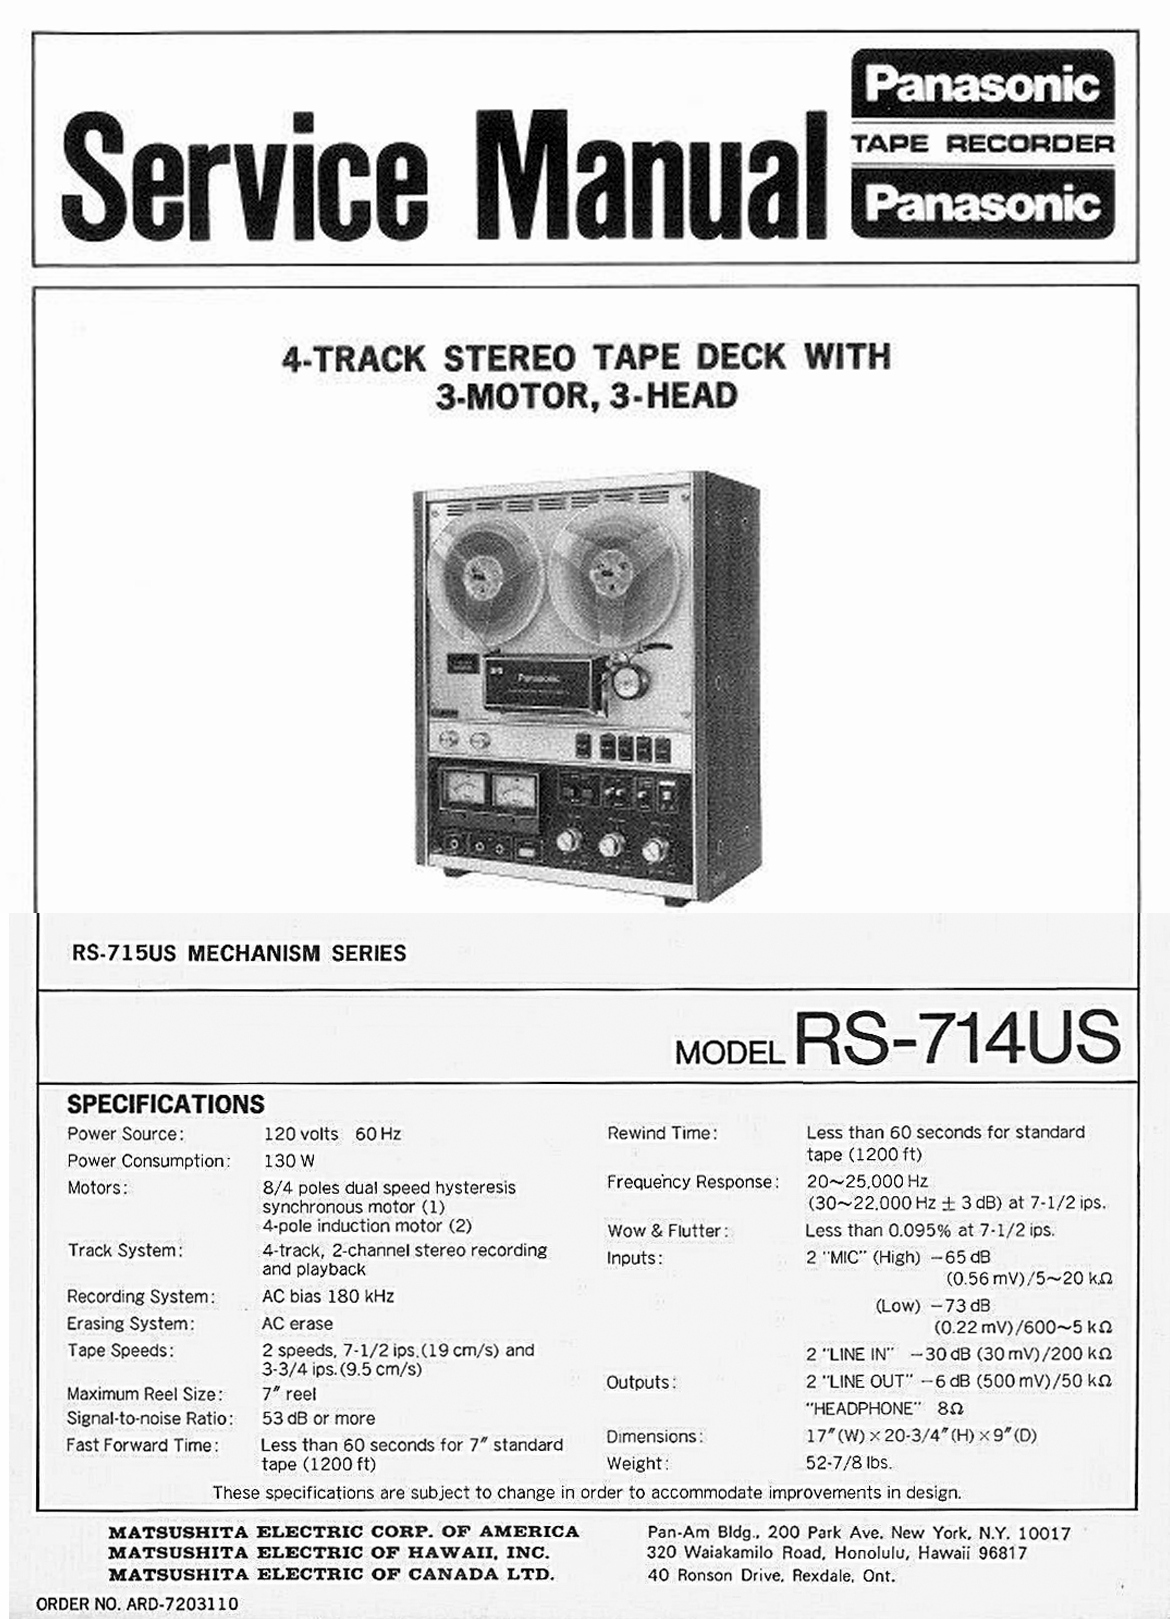 Technics RS-714 US-Manual-1970.jpg